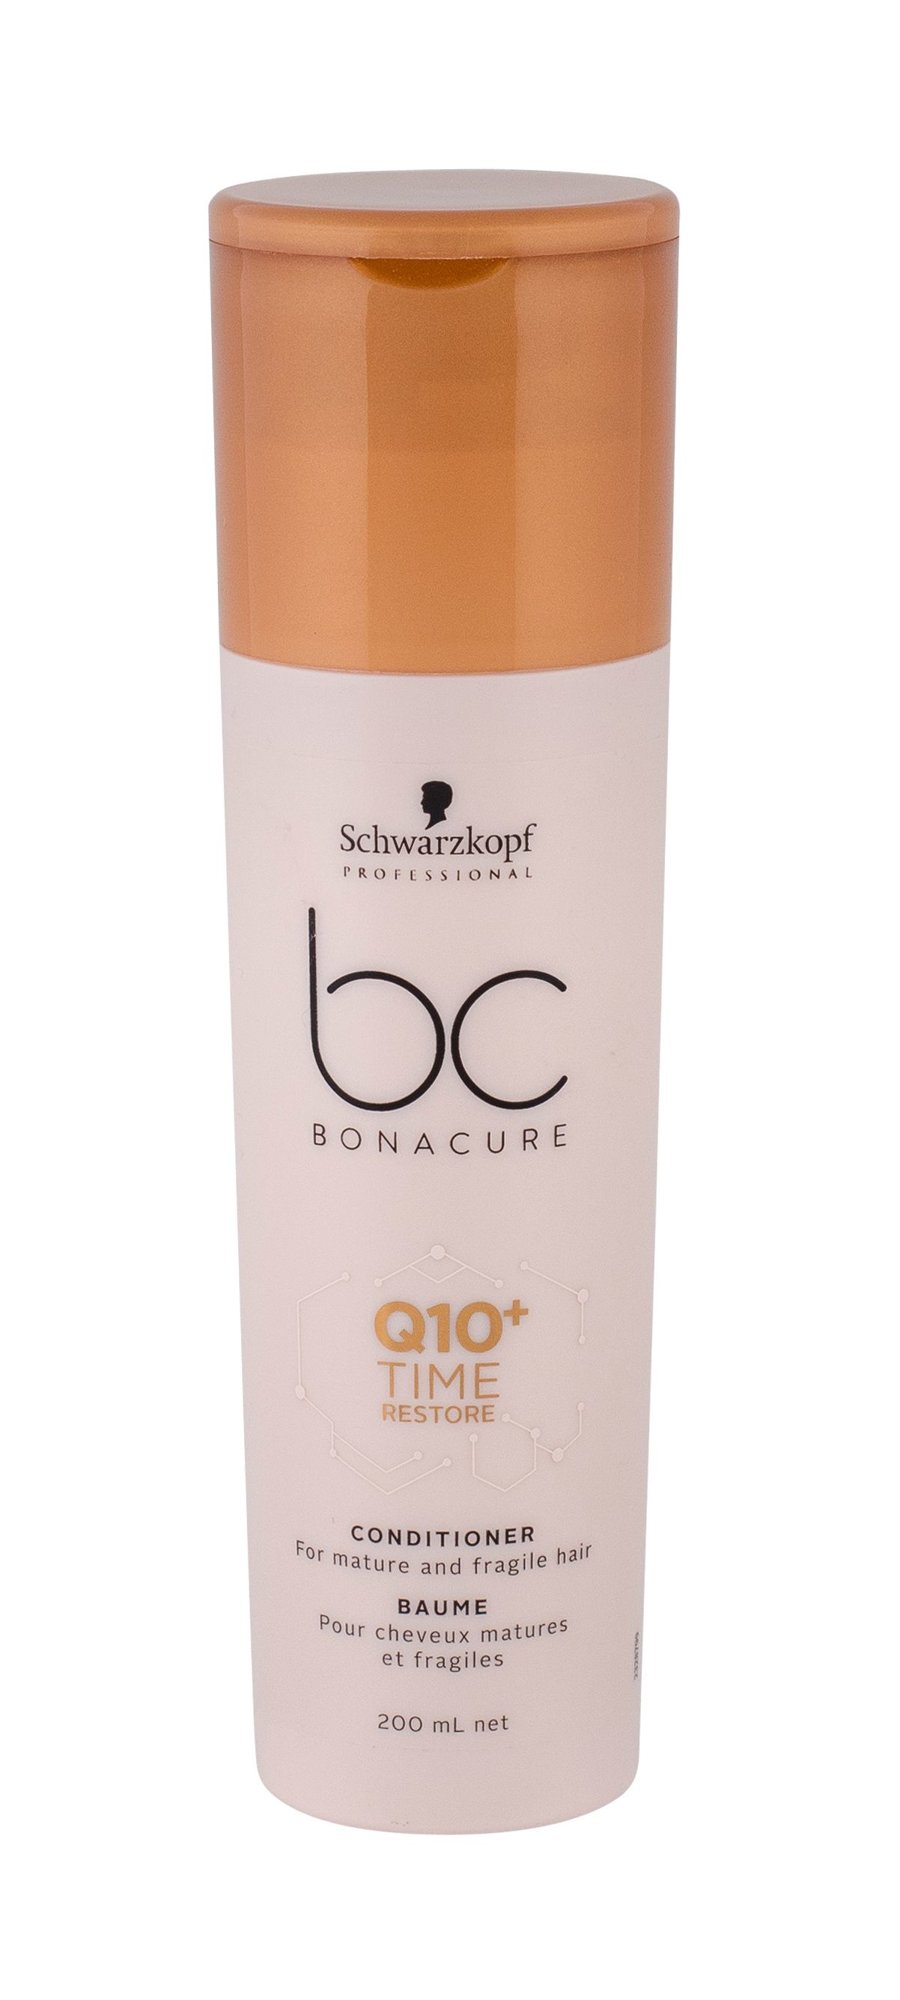 Schwarzkopf BC Bonacure Q10+ Time Restore